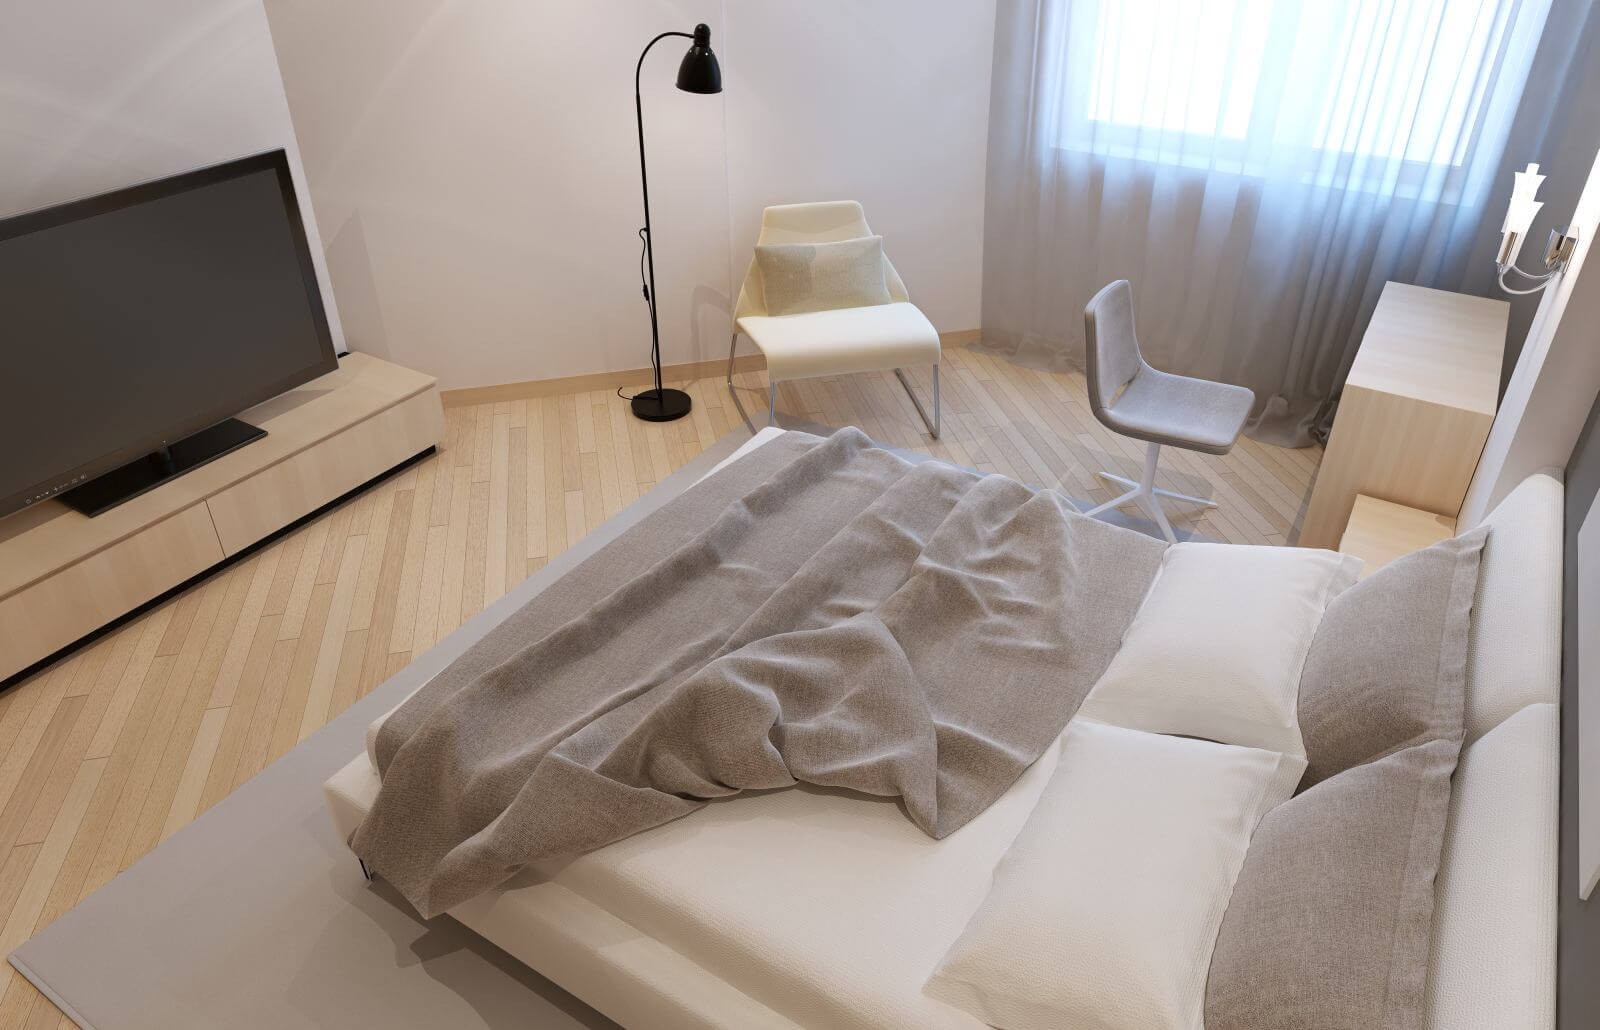 Unmade bed in avangard bedroom with white walls. 3D render